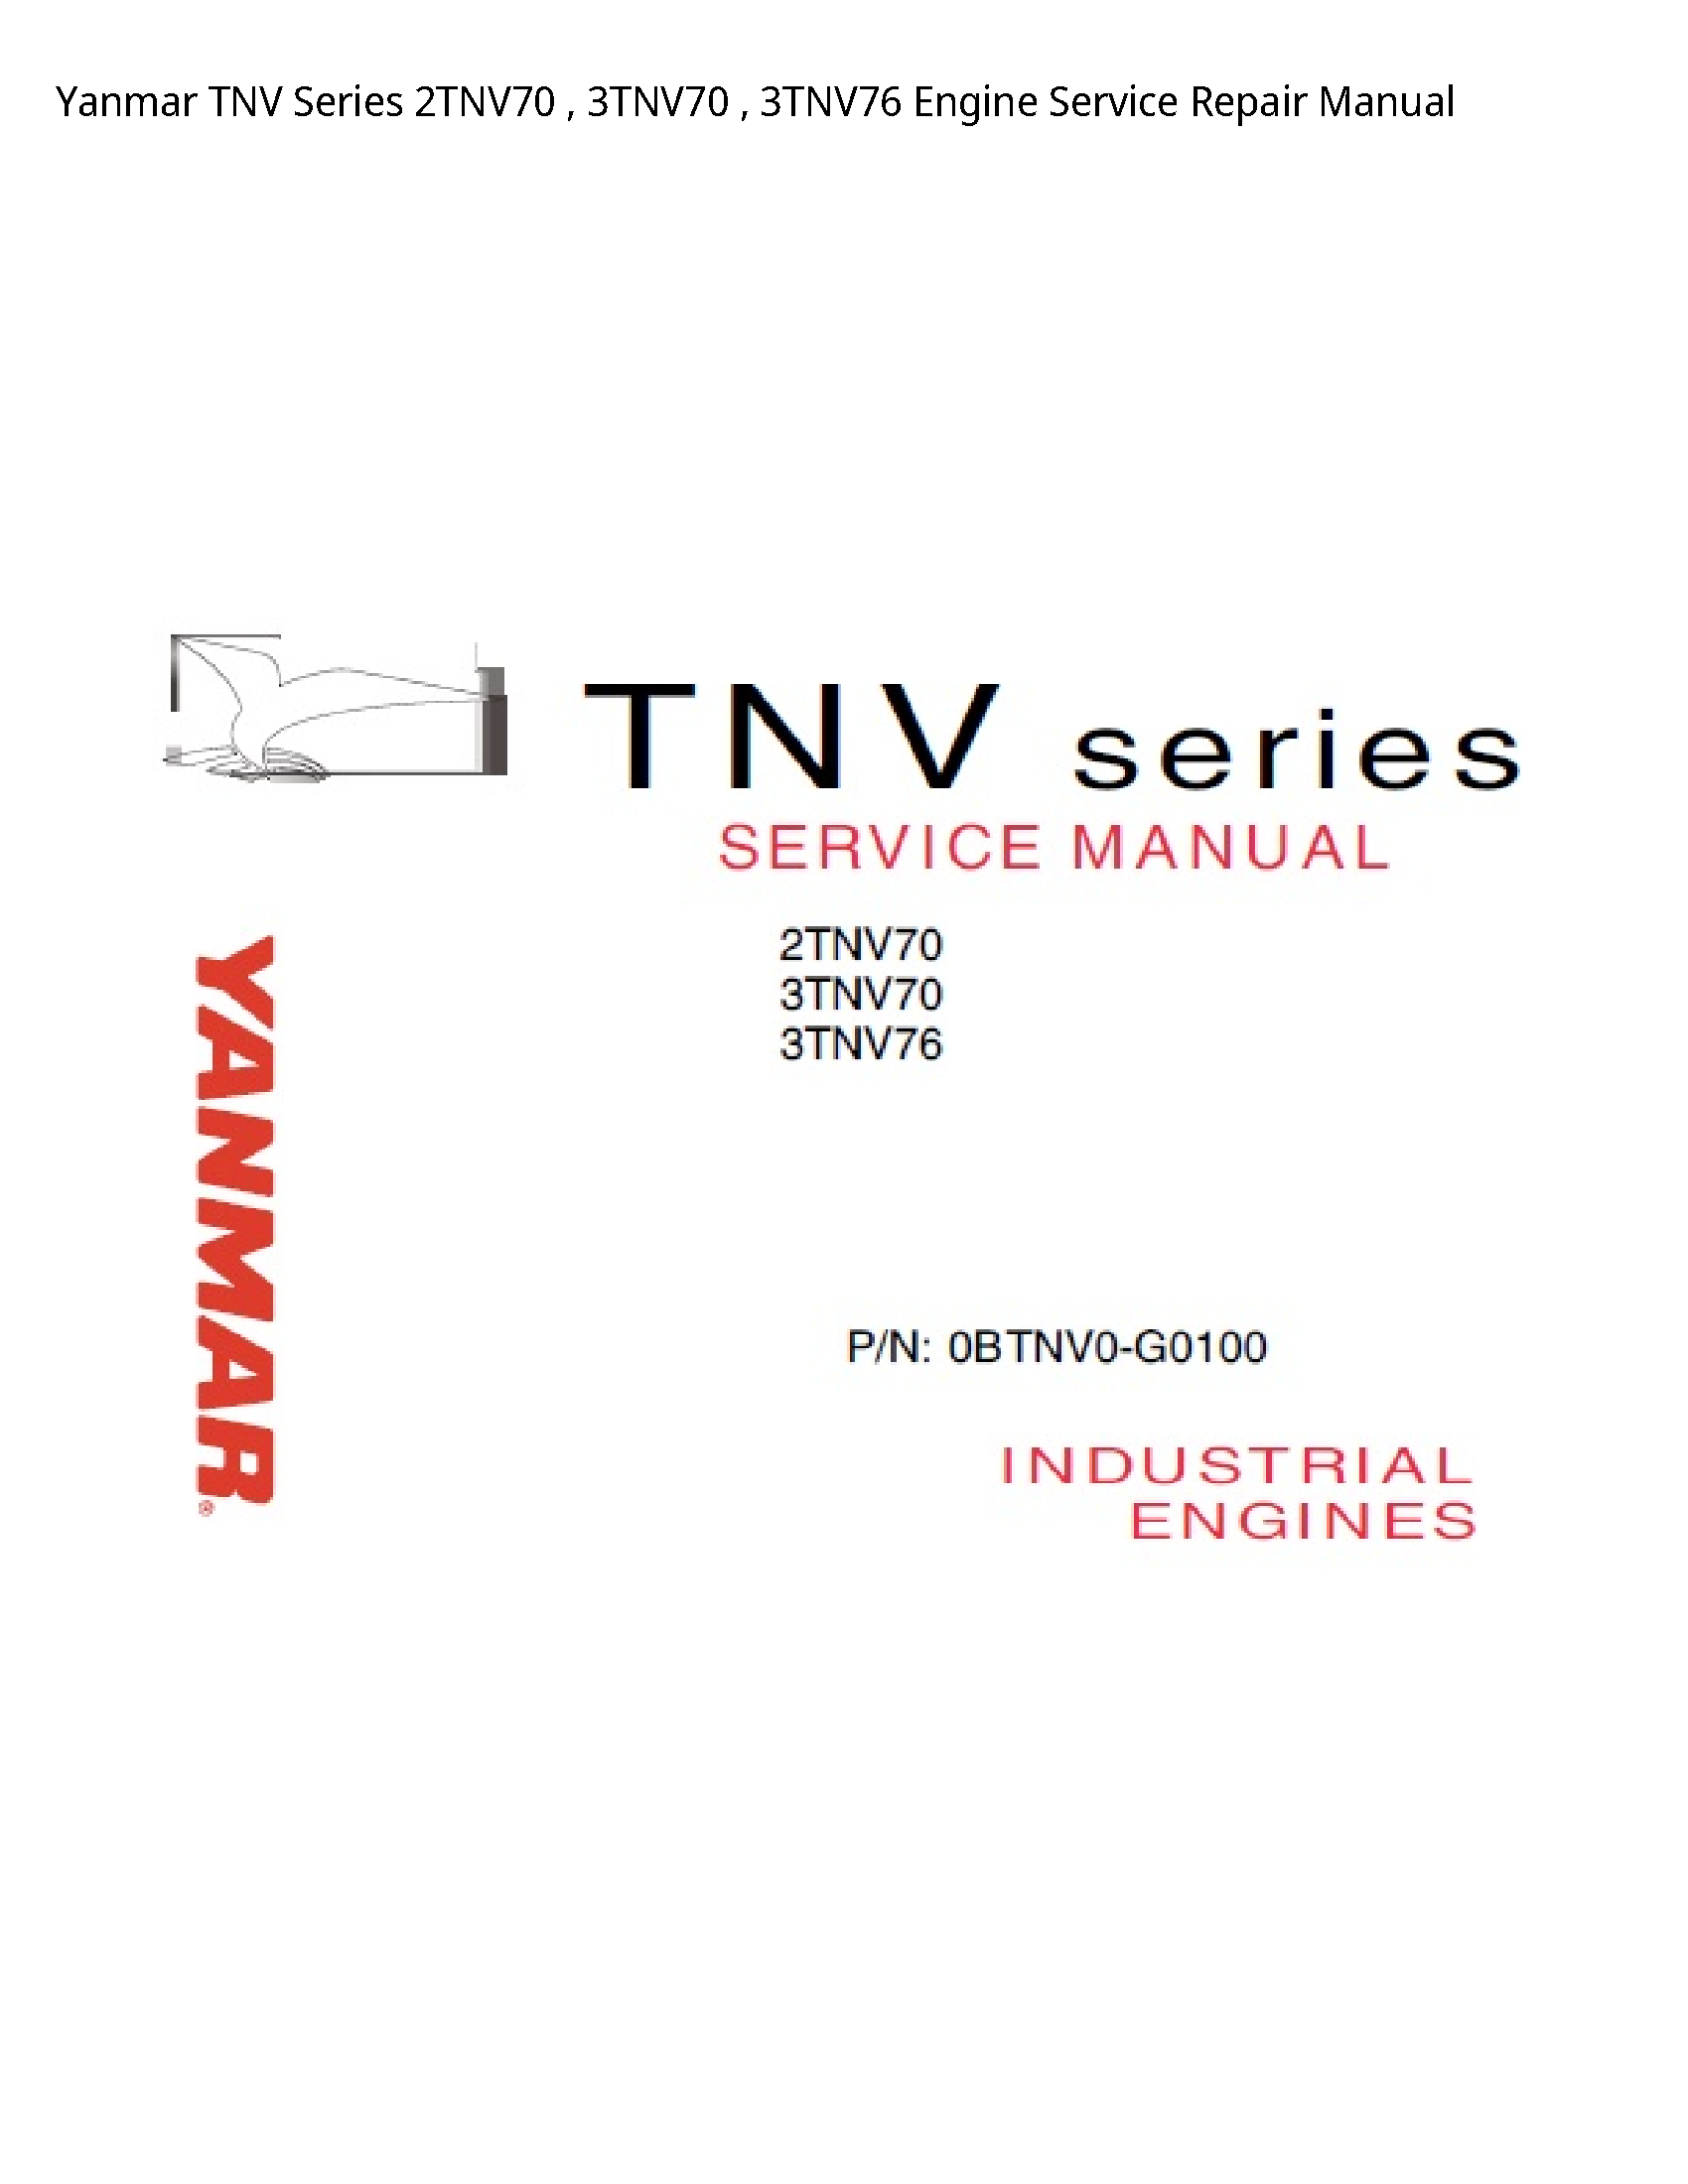 Yanmar 2TNV70 TNV Series Engine manual